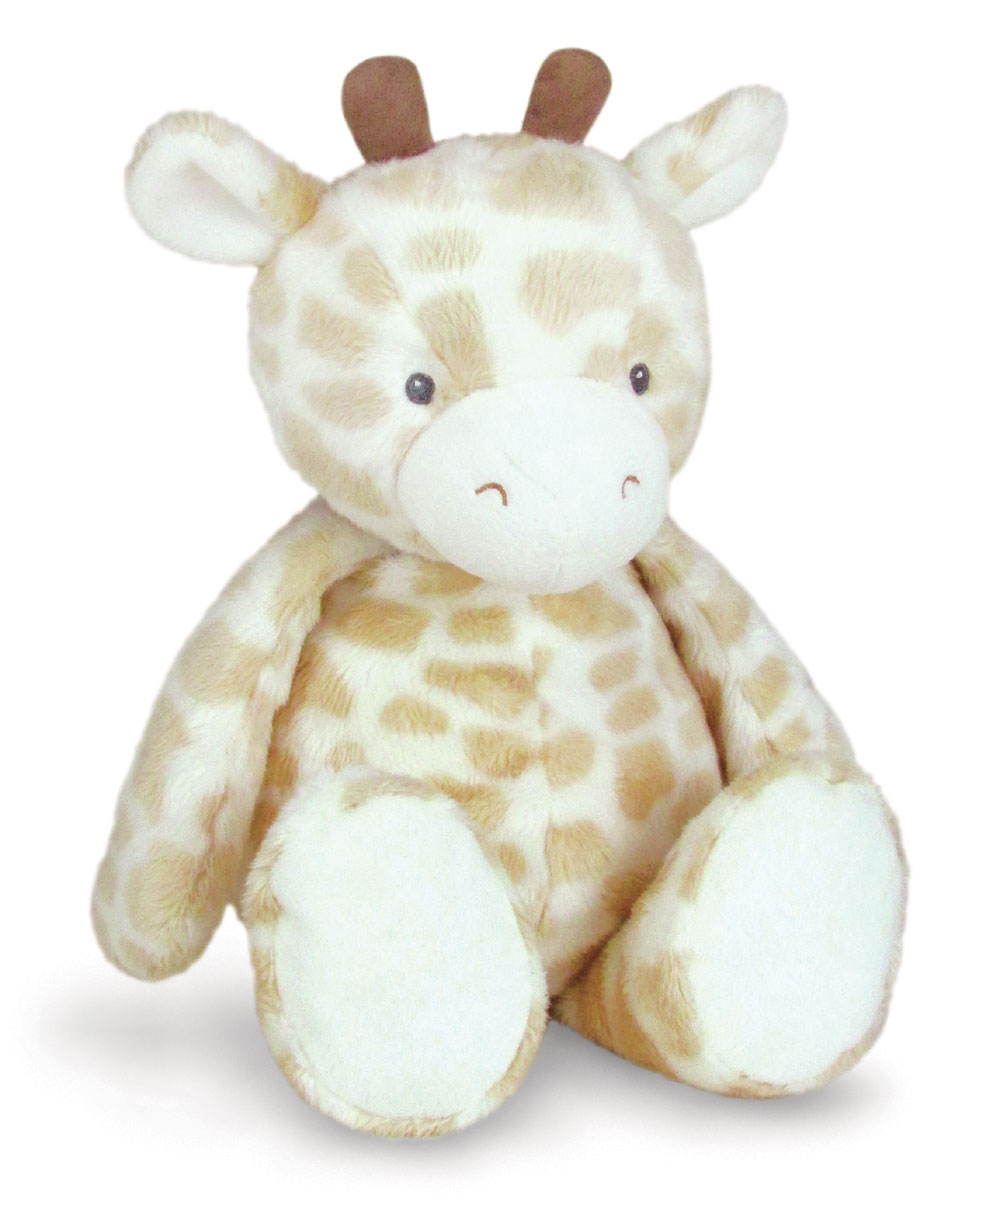 Carter's Plush Giraffe | Toys R Us Canada